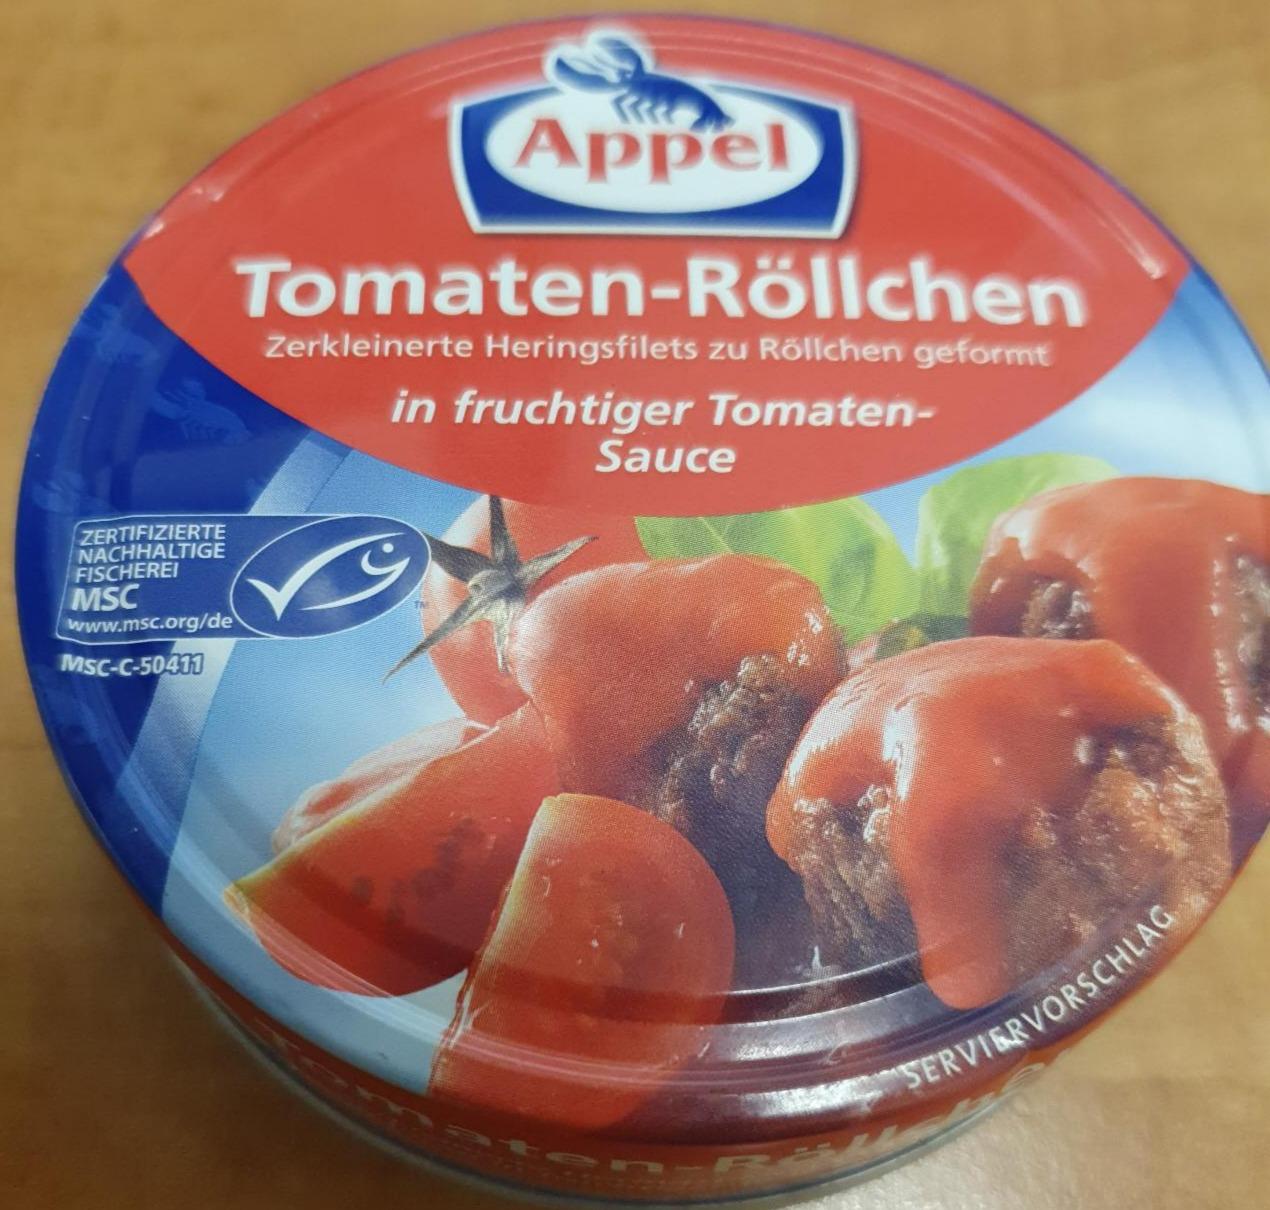 Fotografie - Tomaten-Röllchen in fruchtiger Tomaten-Sauce Appel